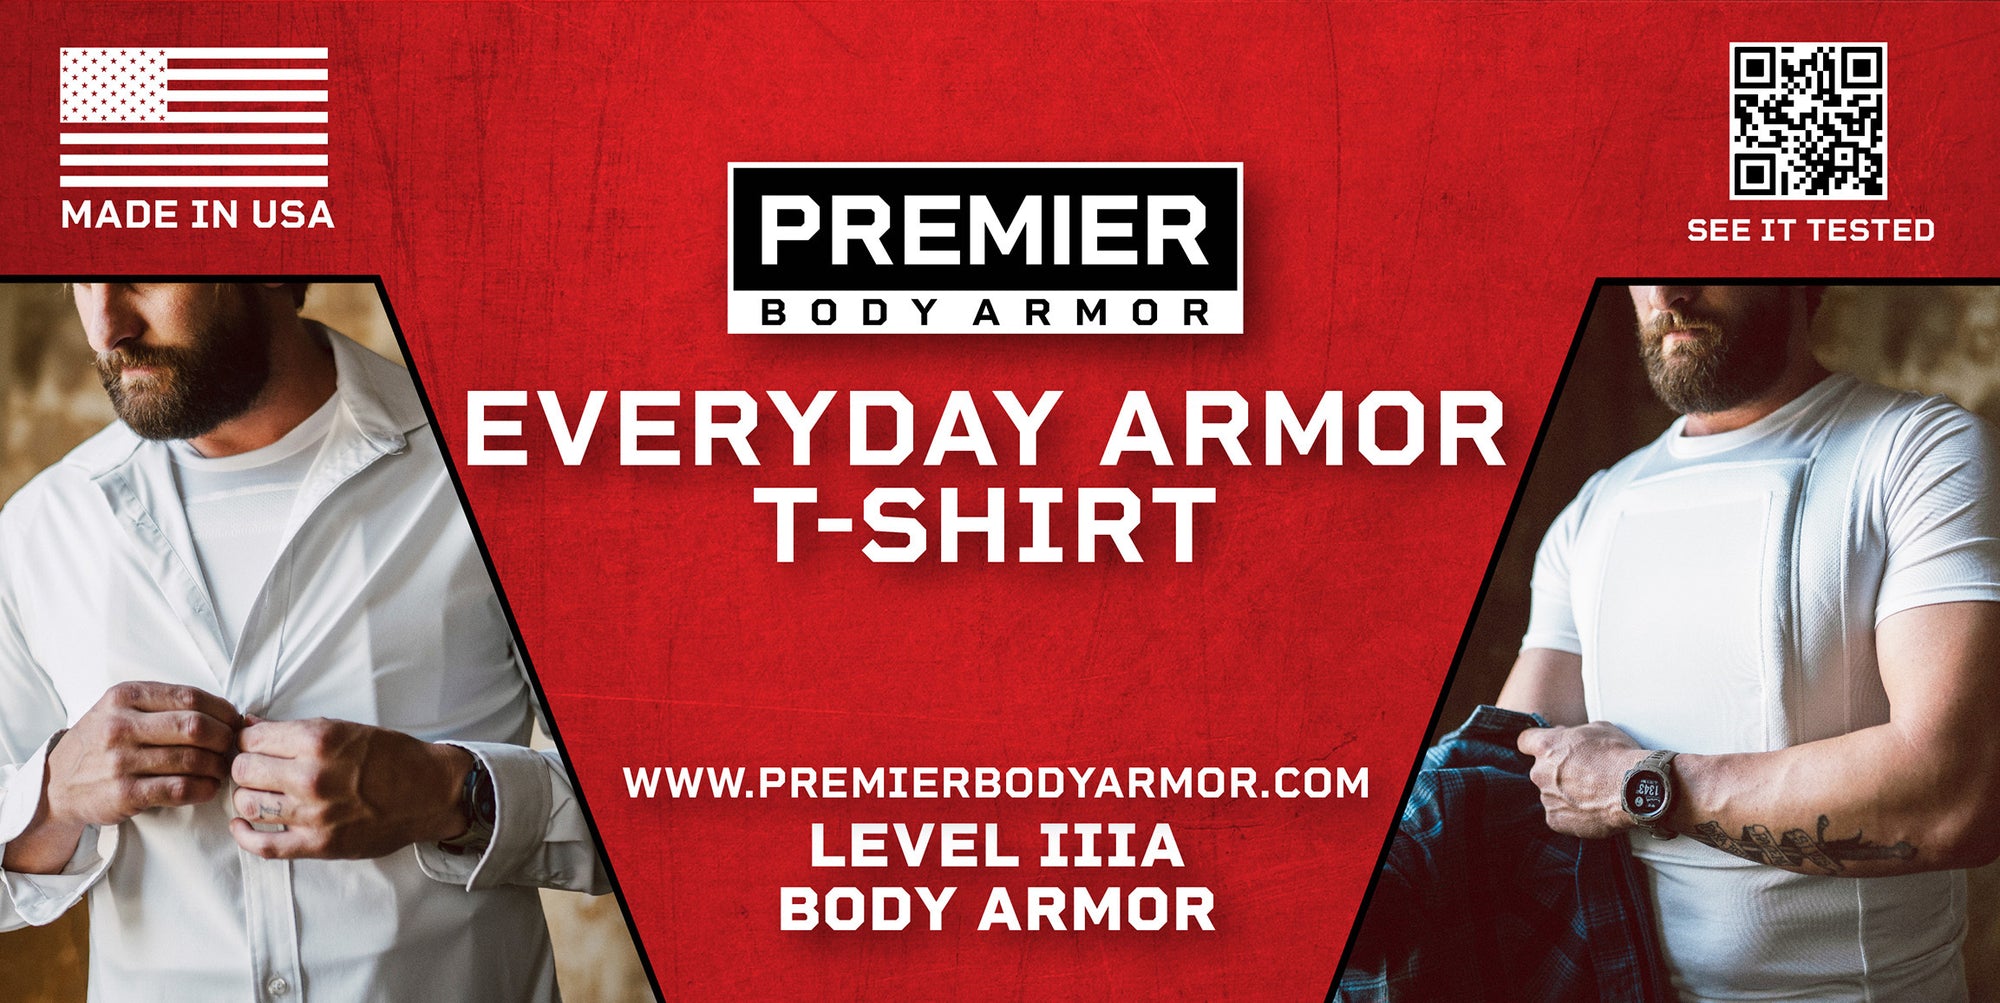 Premier Body Armor Everyday Armor T-Shirt with Level IIIA Armor Panels SKU - 181686